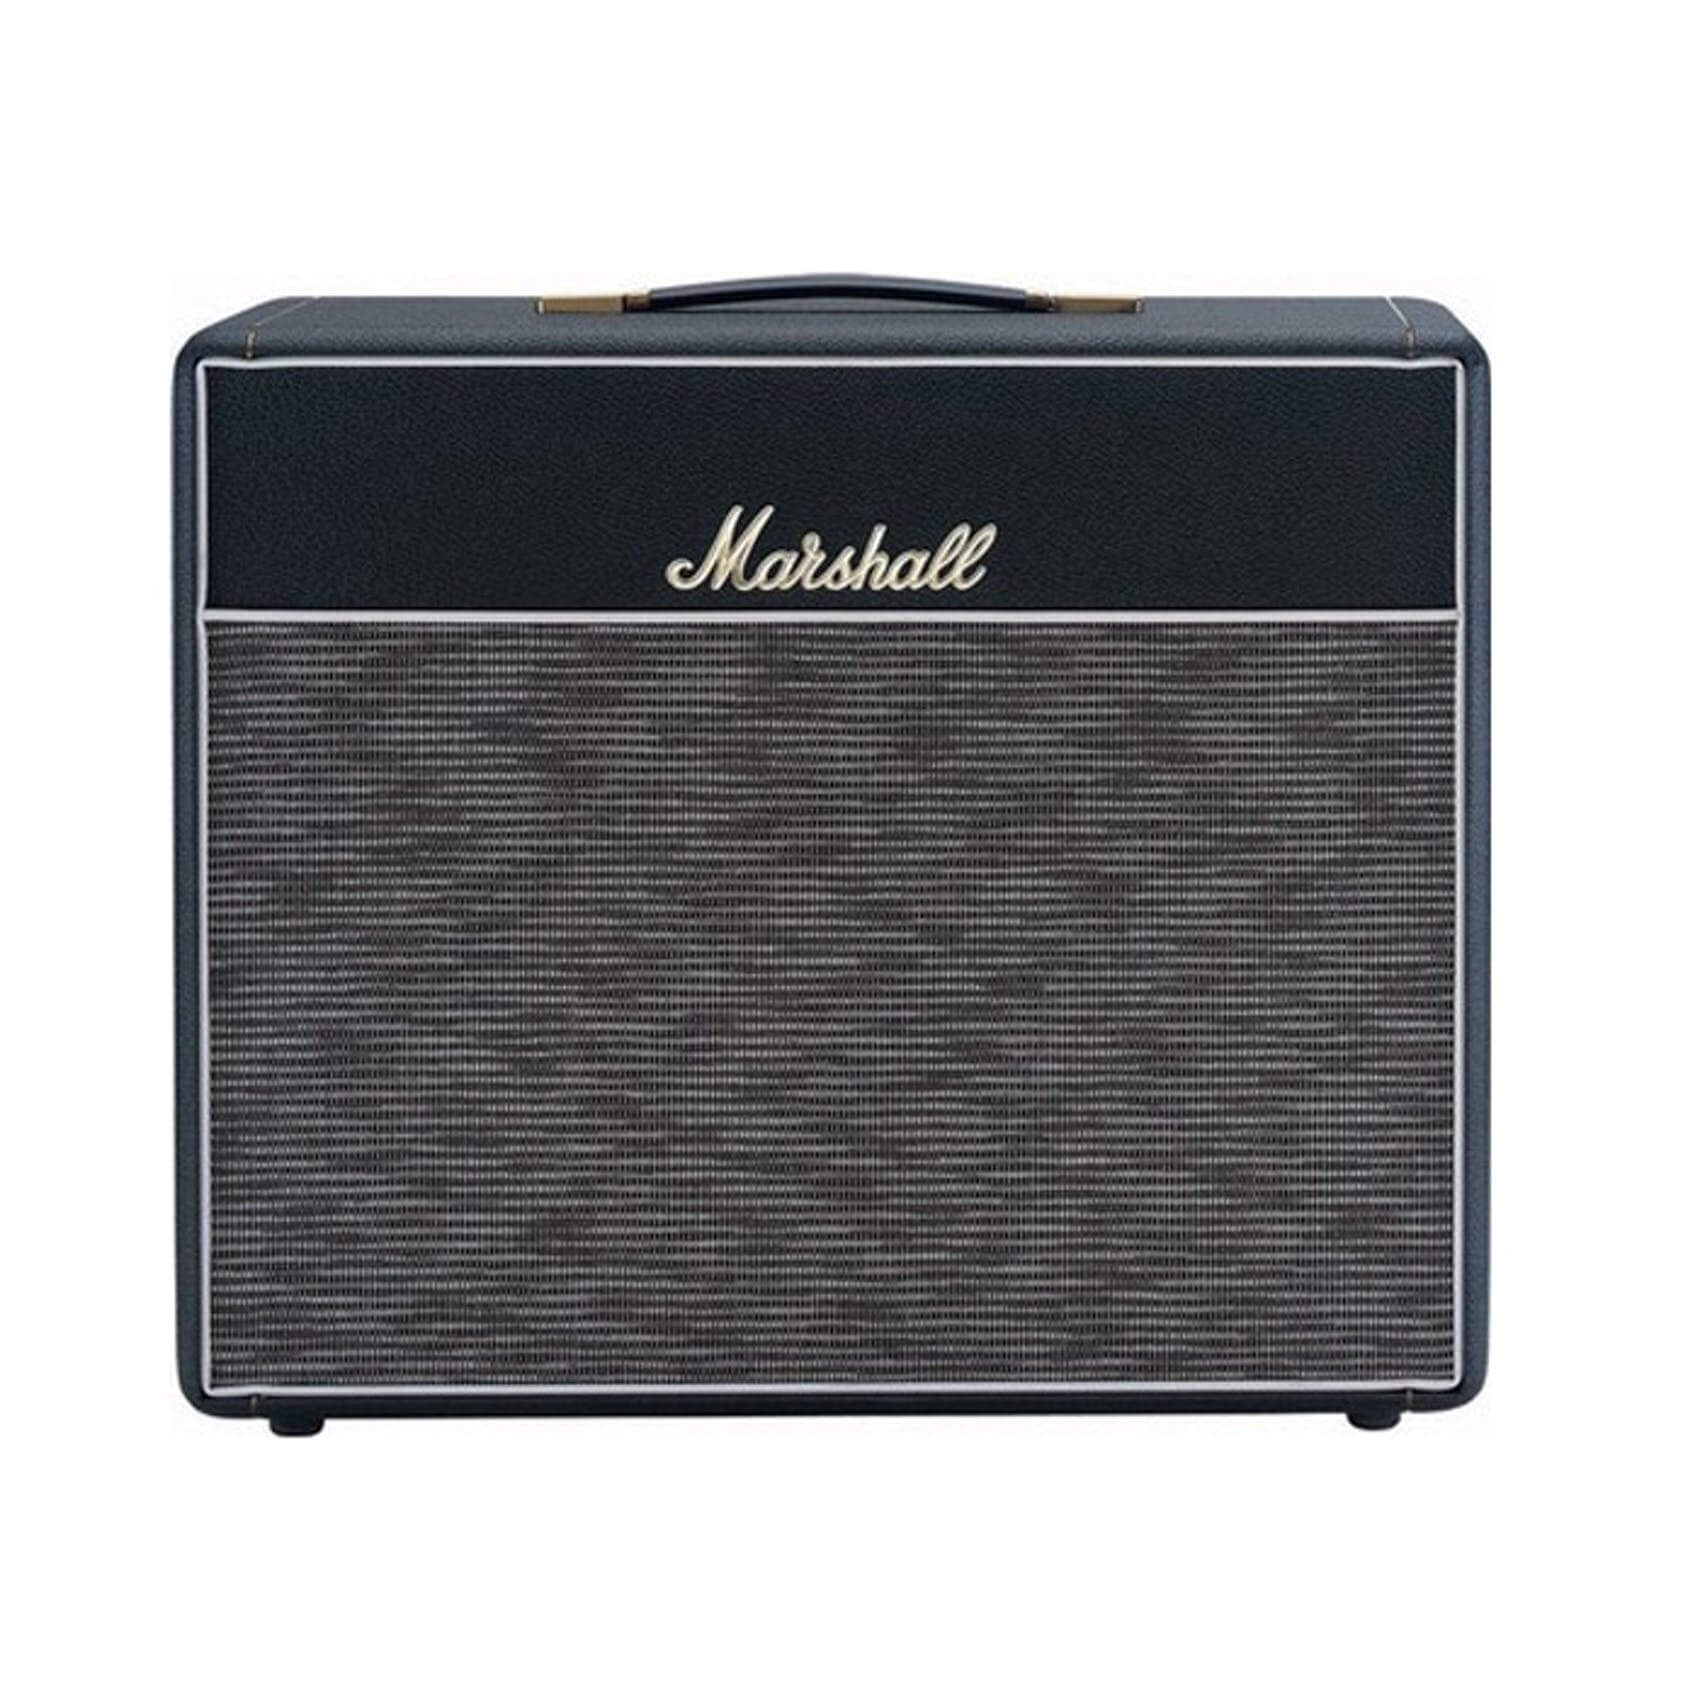 Marshall Amplifier Marshall 1x12